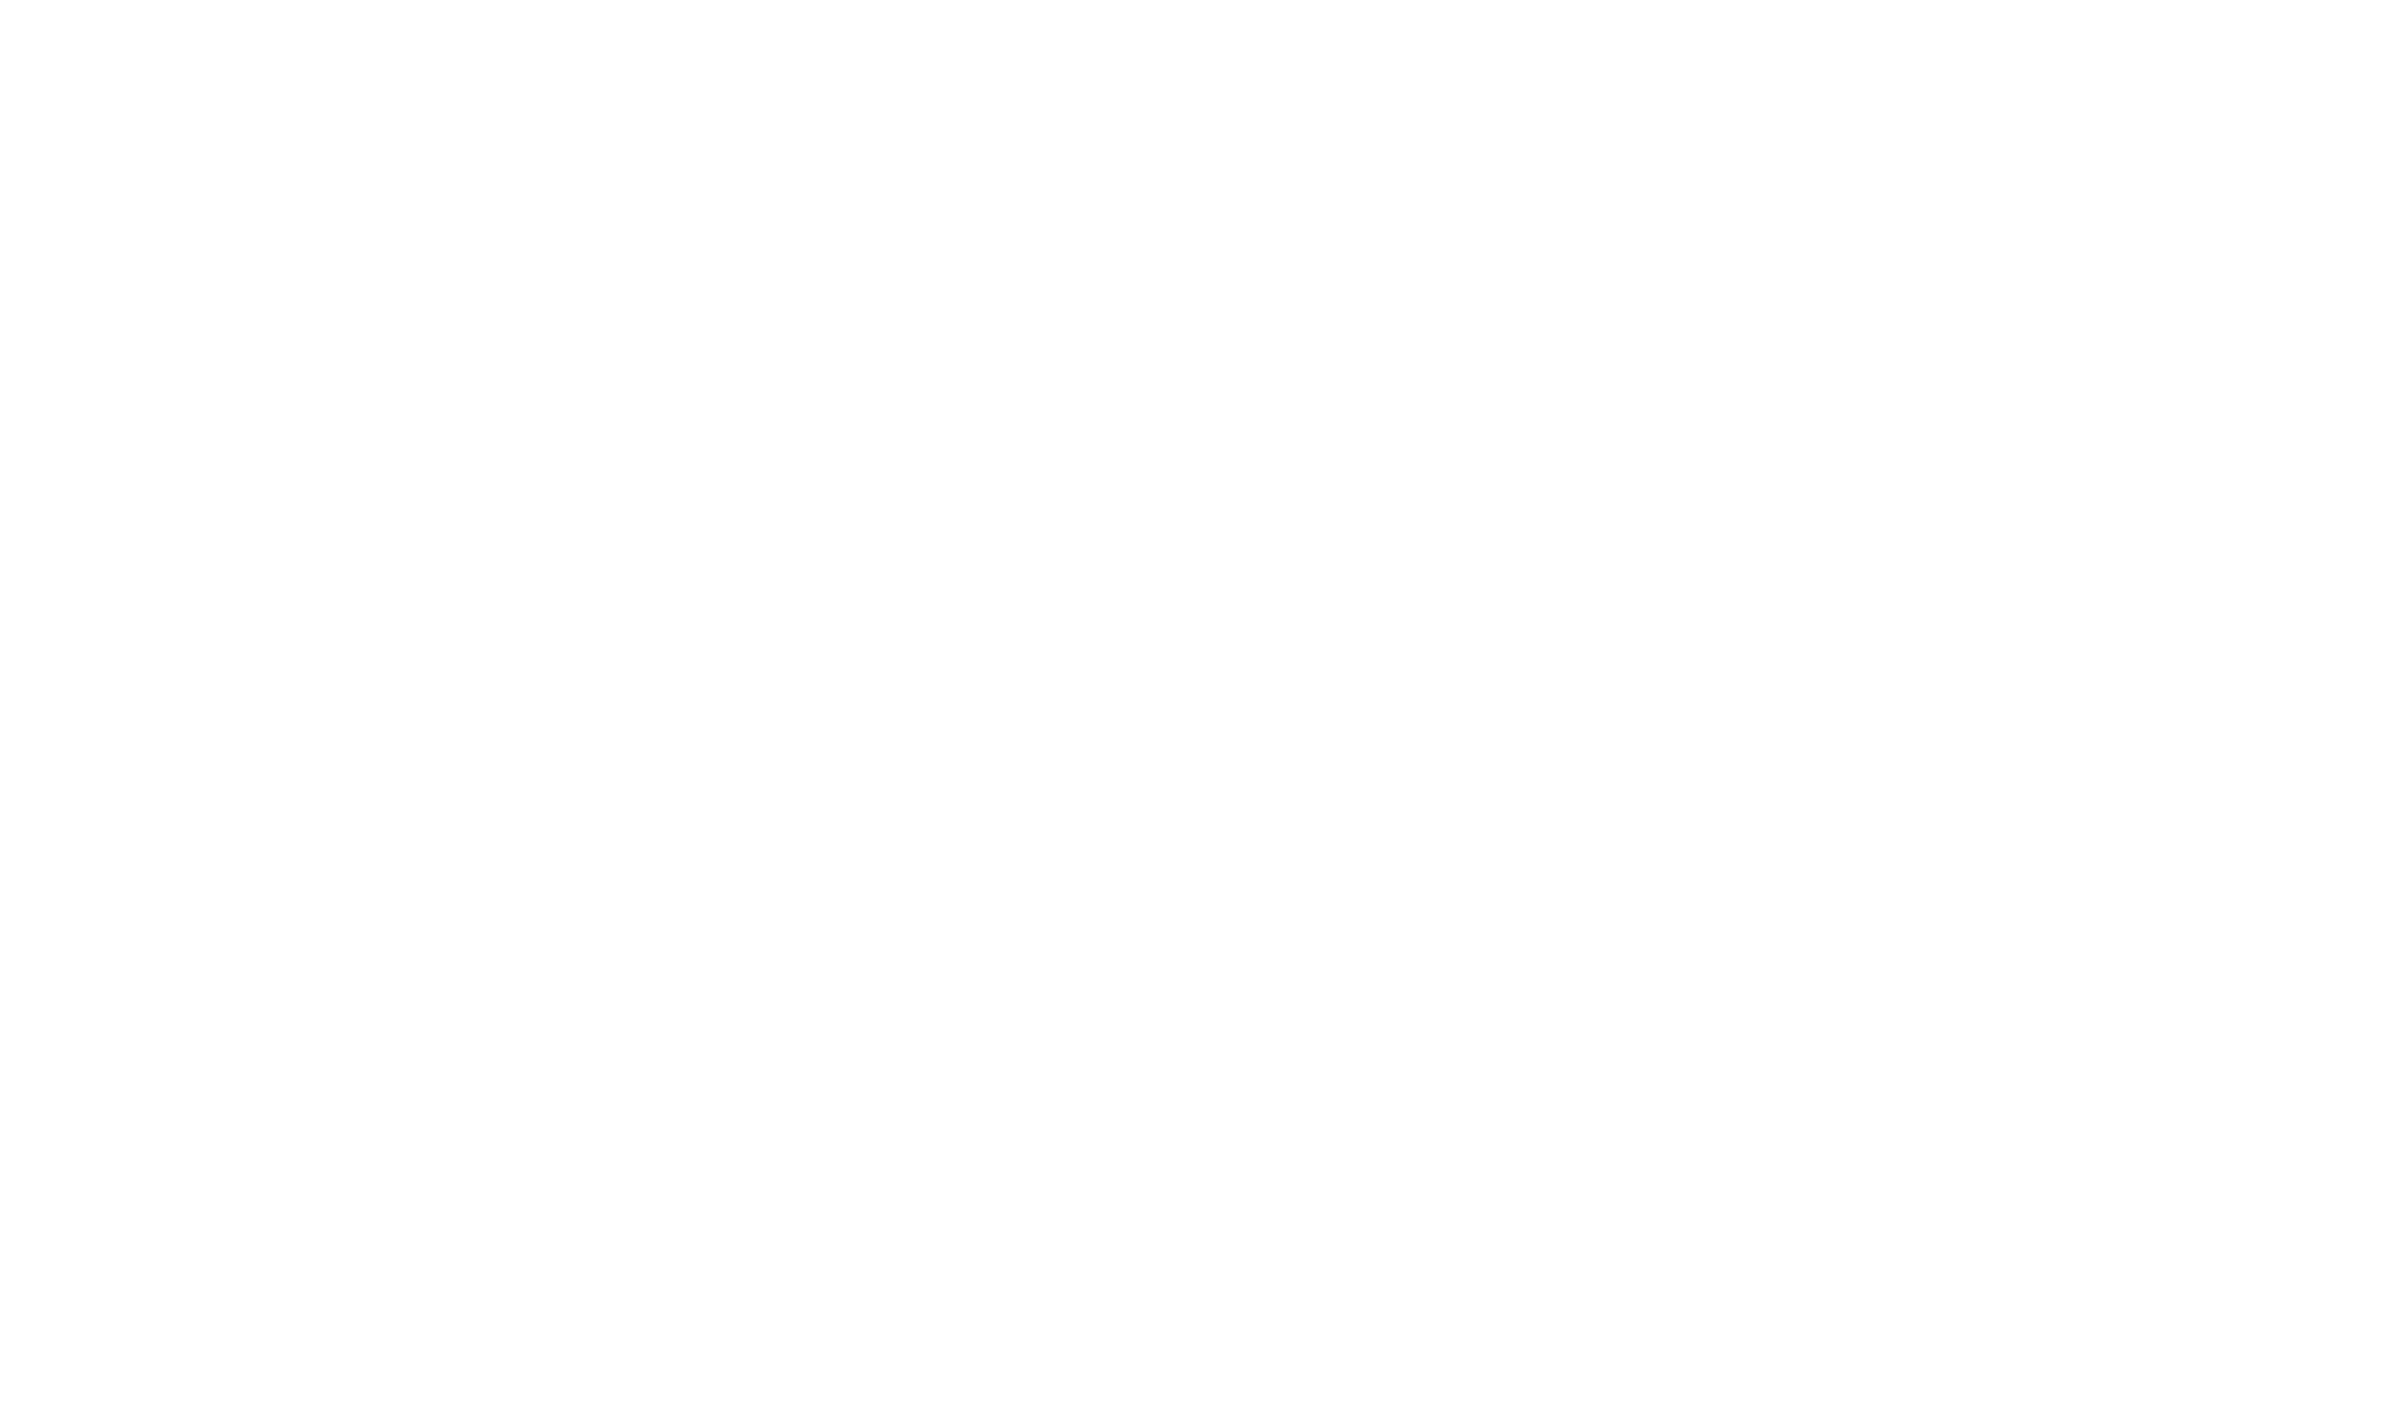 Pingan Logo - Ping an Logo PNG Transparent & SVG Vector - Freebie Supply